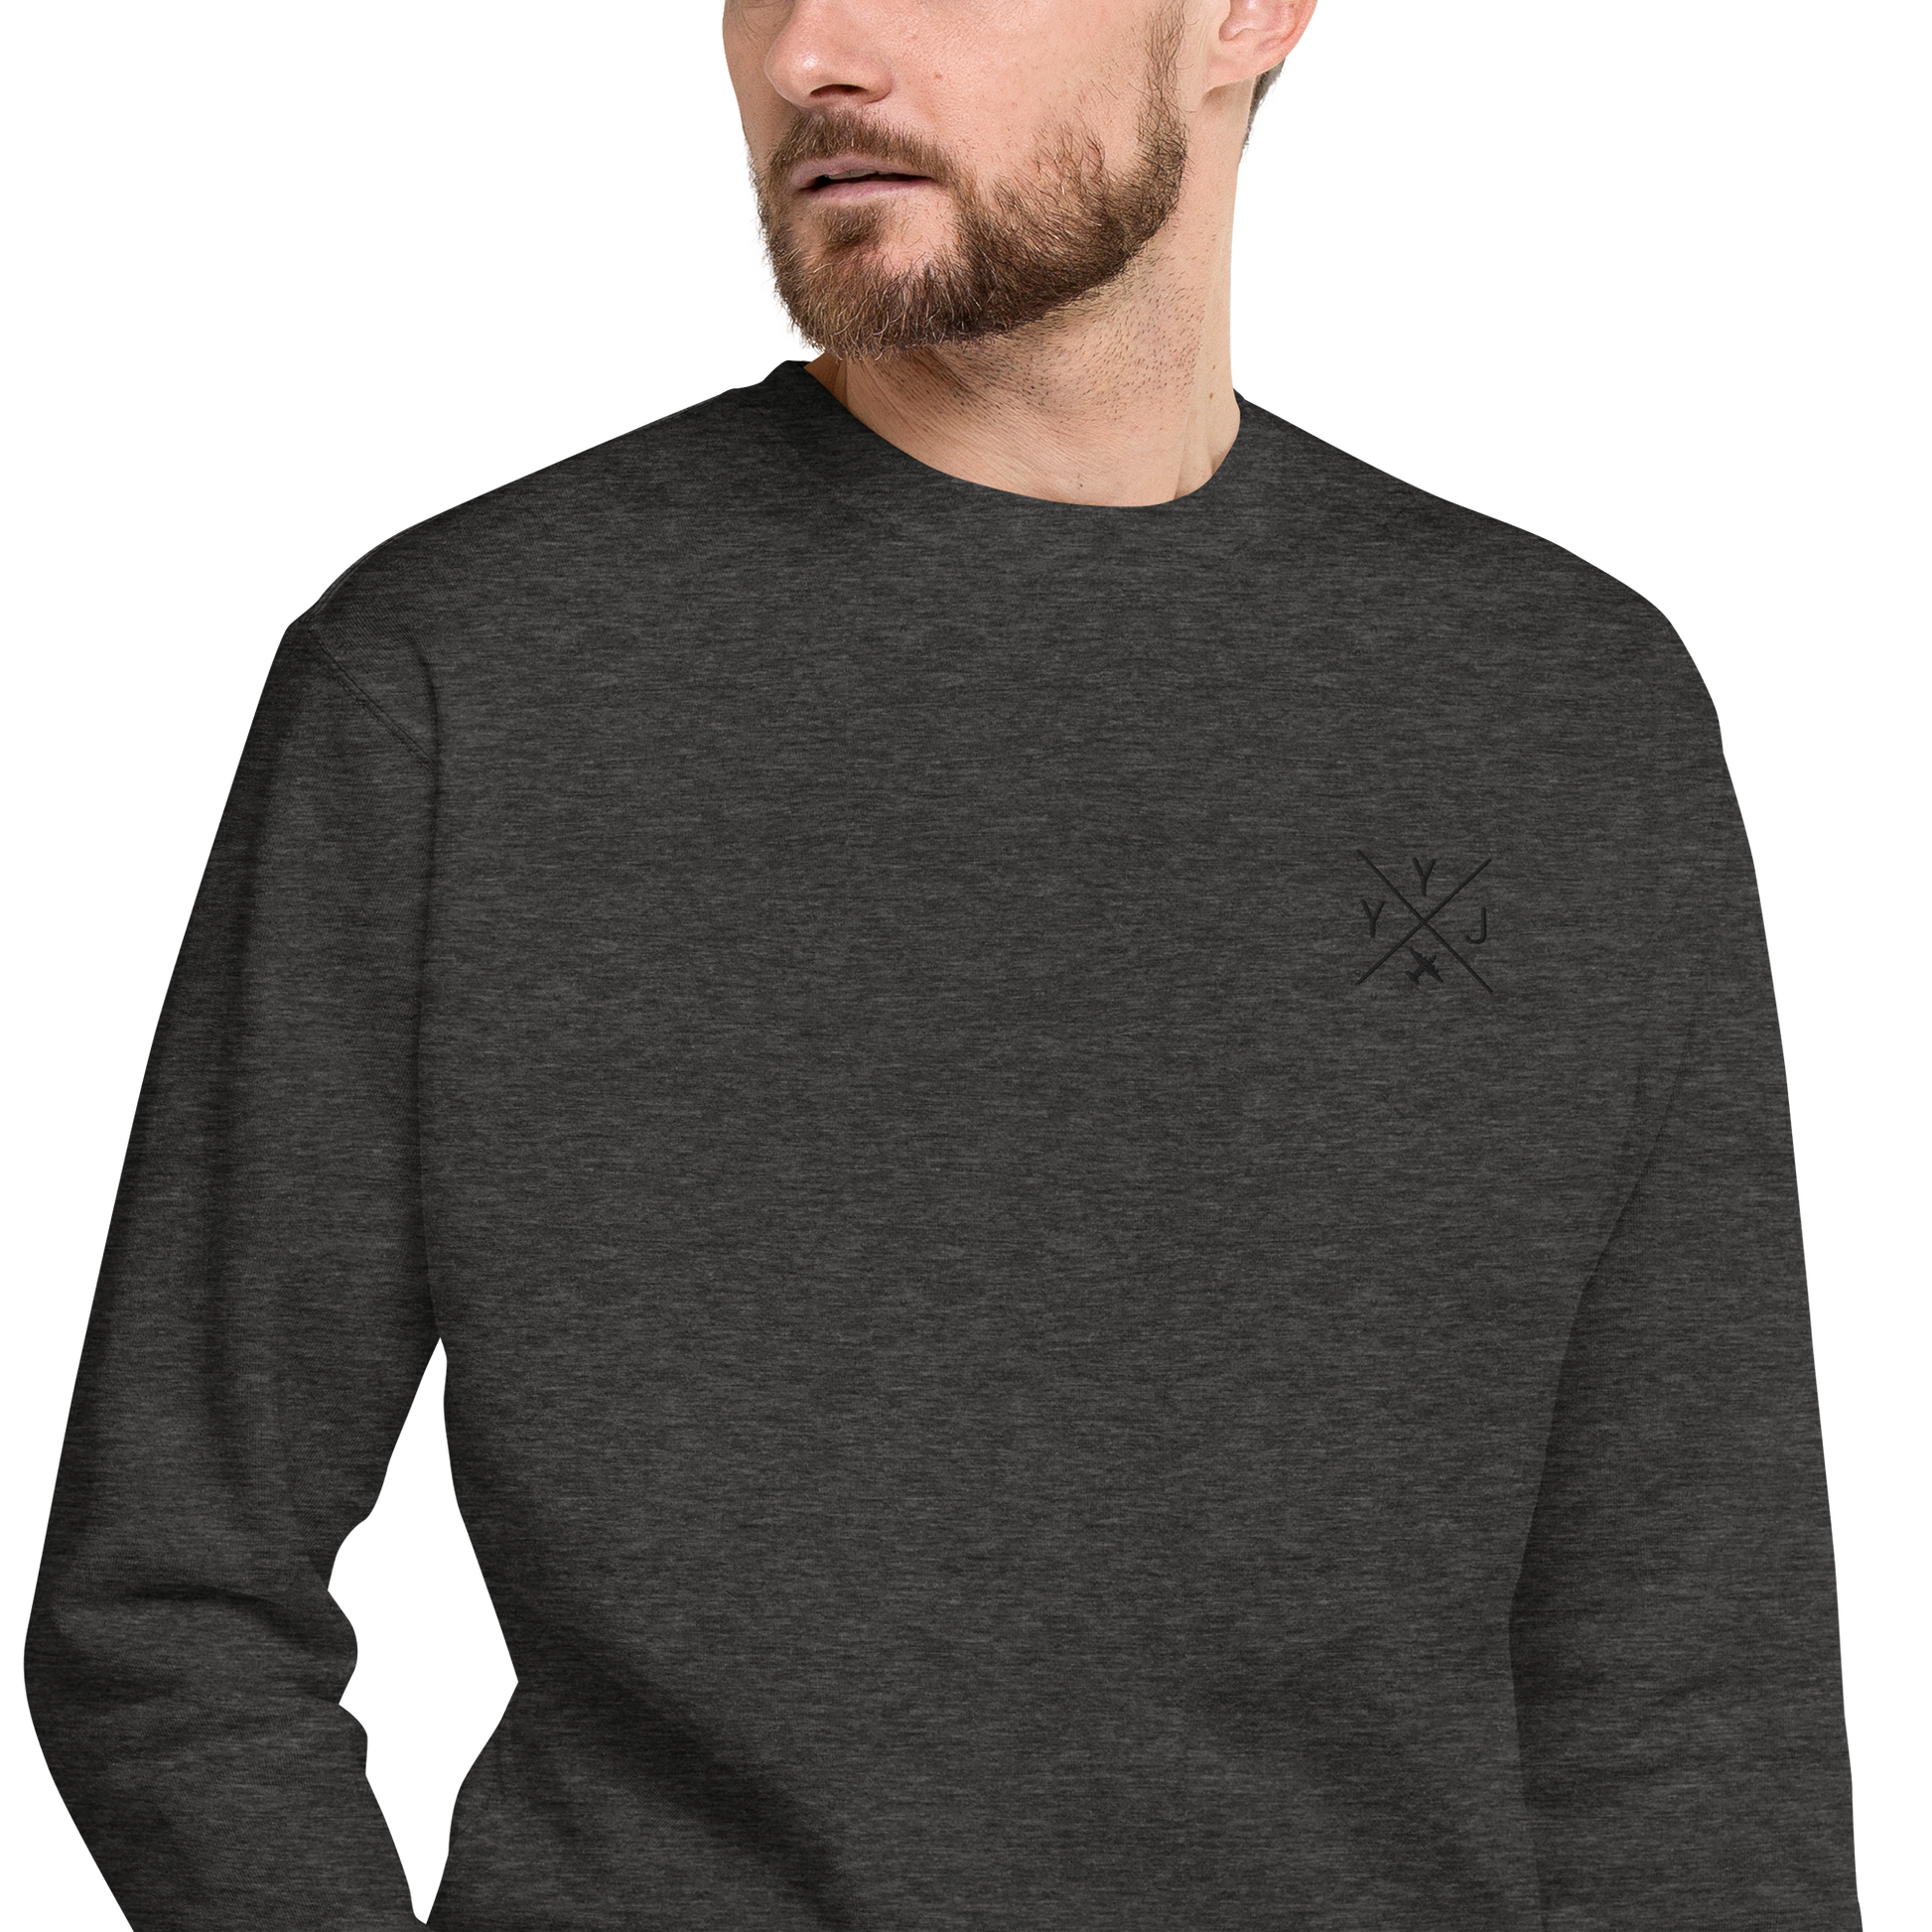 YHM Designs - YYJ Victoria Premium Sweatshirt - Crossed-X Design with Airport Code and Vintage Propliner - Black Embroidery - Image 07